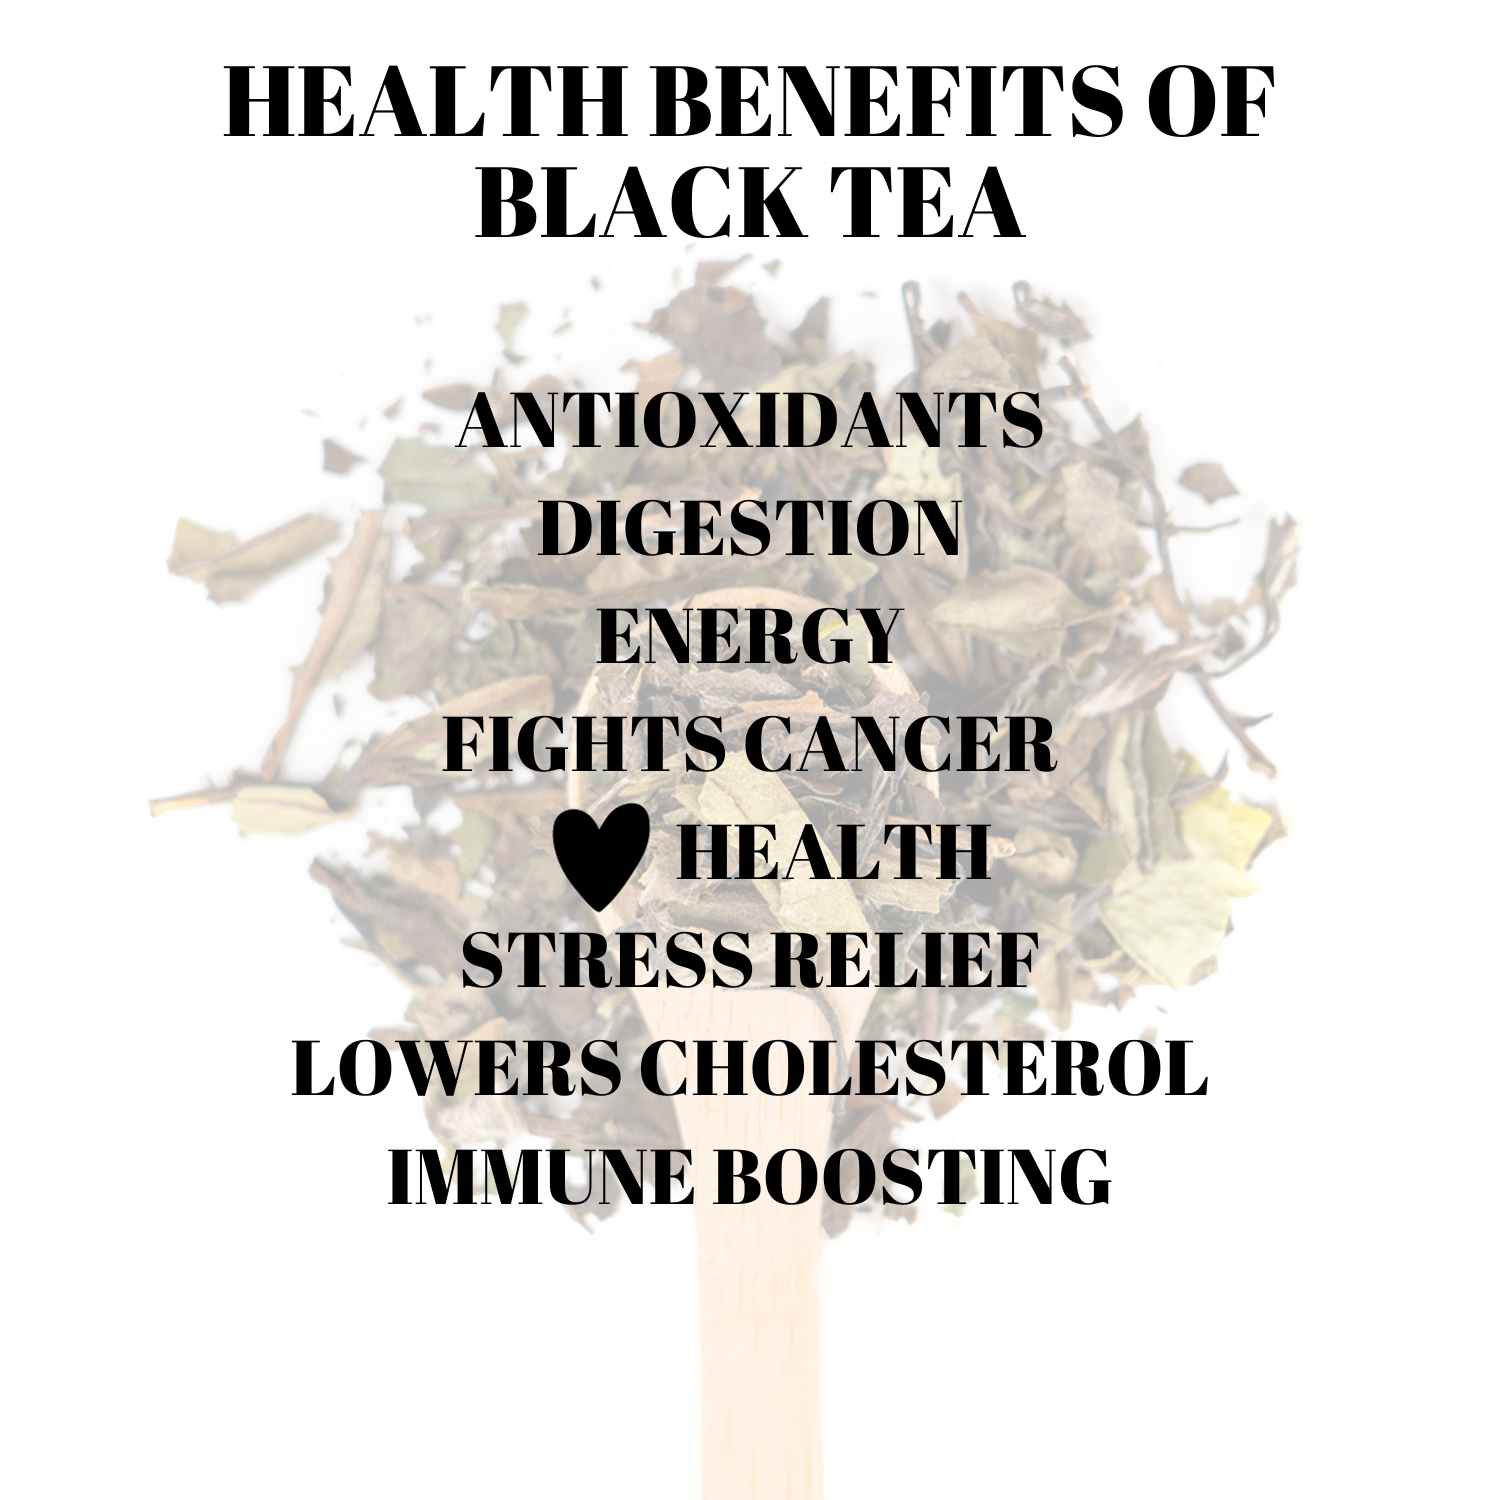 Black Tea Health Benefits